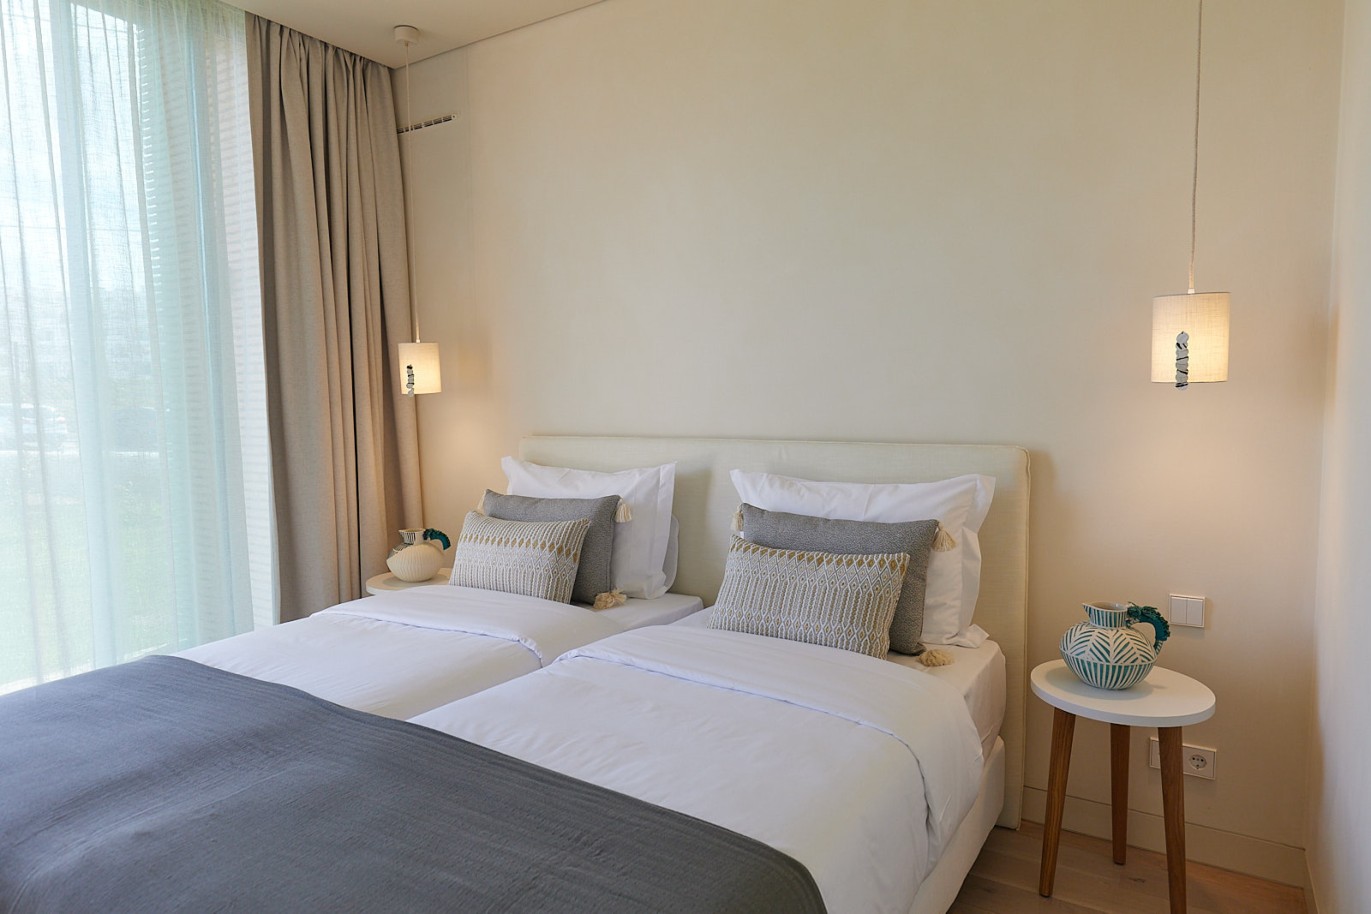 2 bedroom apartment in resort, for sale in Porches, Algarve_229173